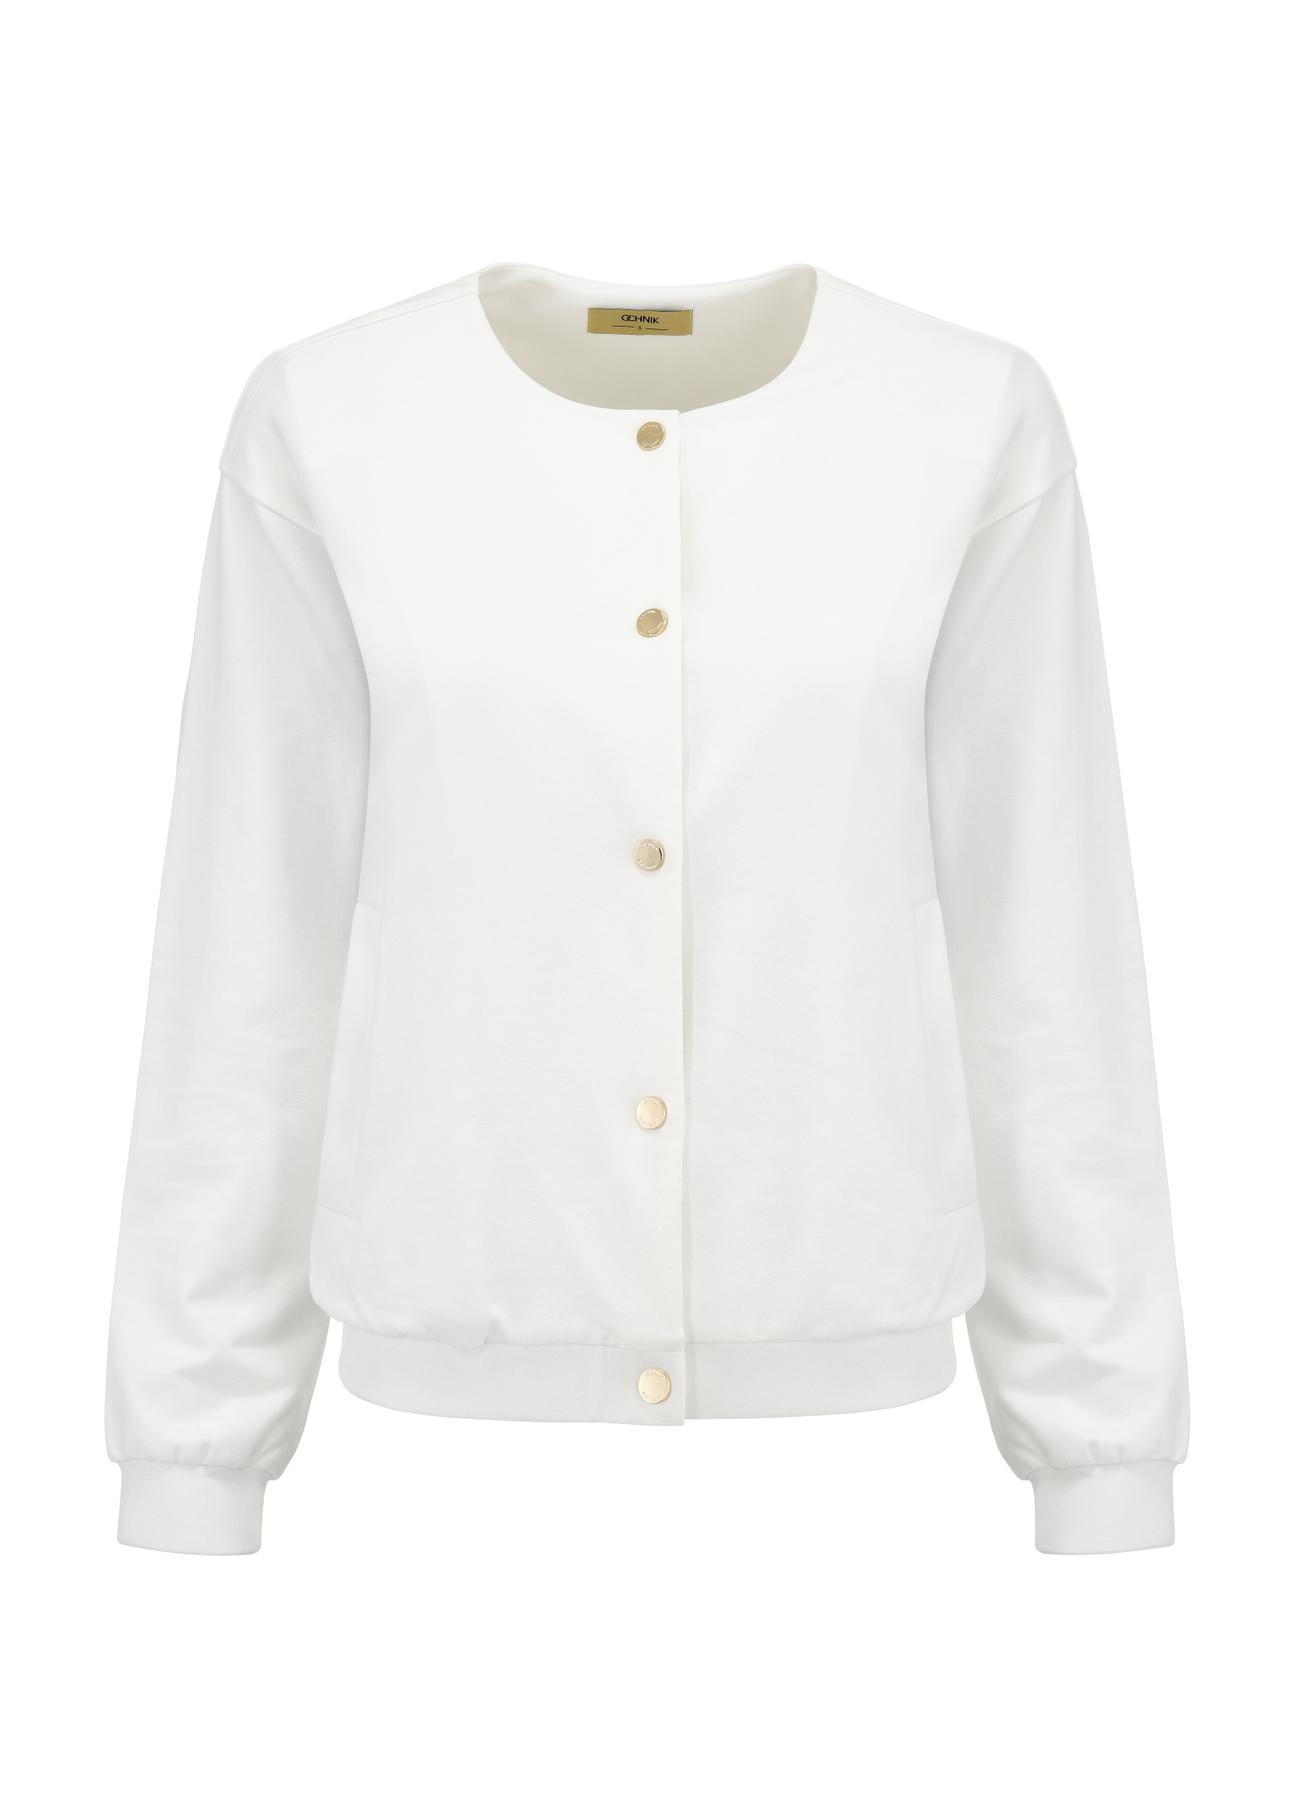 Kremowa zapinana bluza damska bez kaptura BLZDT-0096-12(W24)